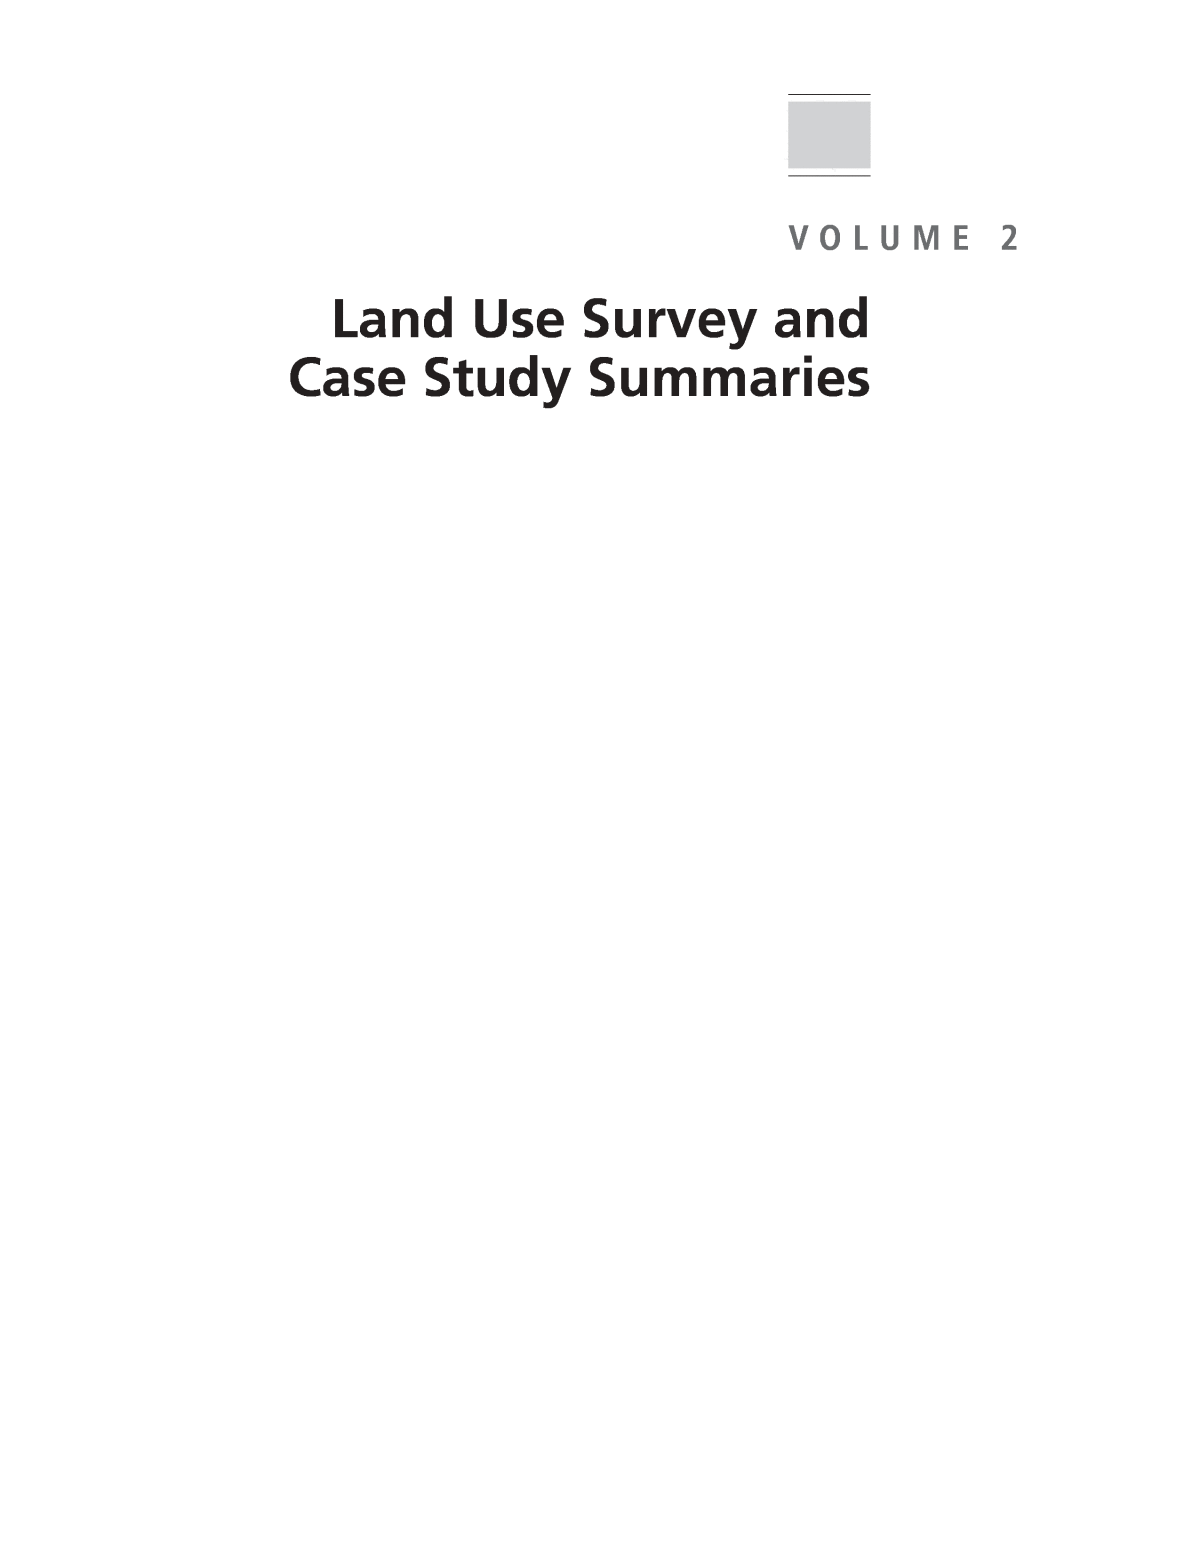 Volume 2 - Land Use Survey and Case Study Summaries